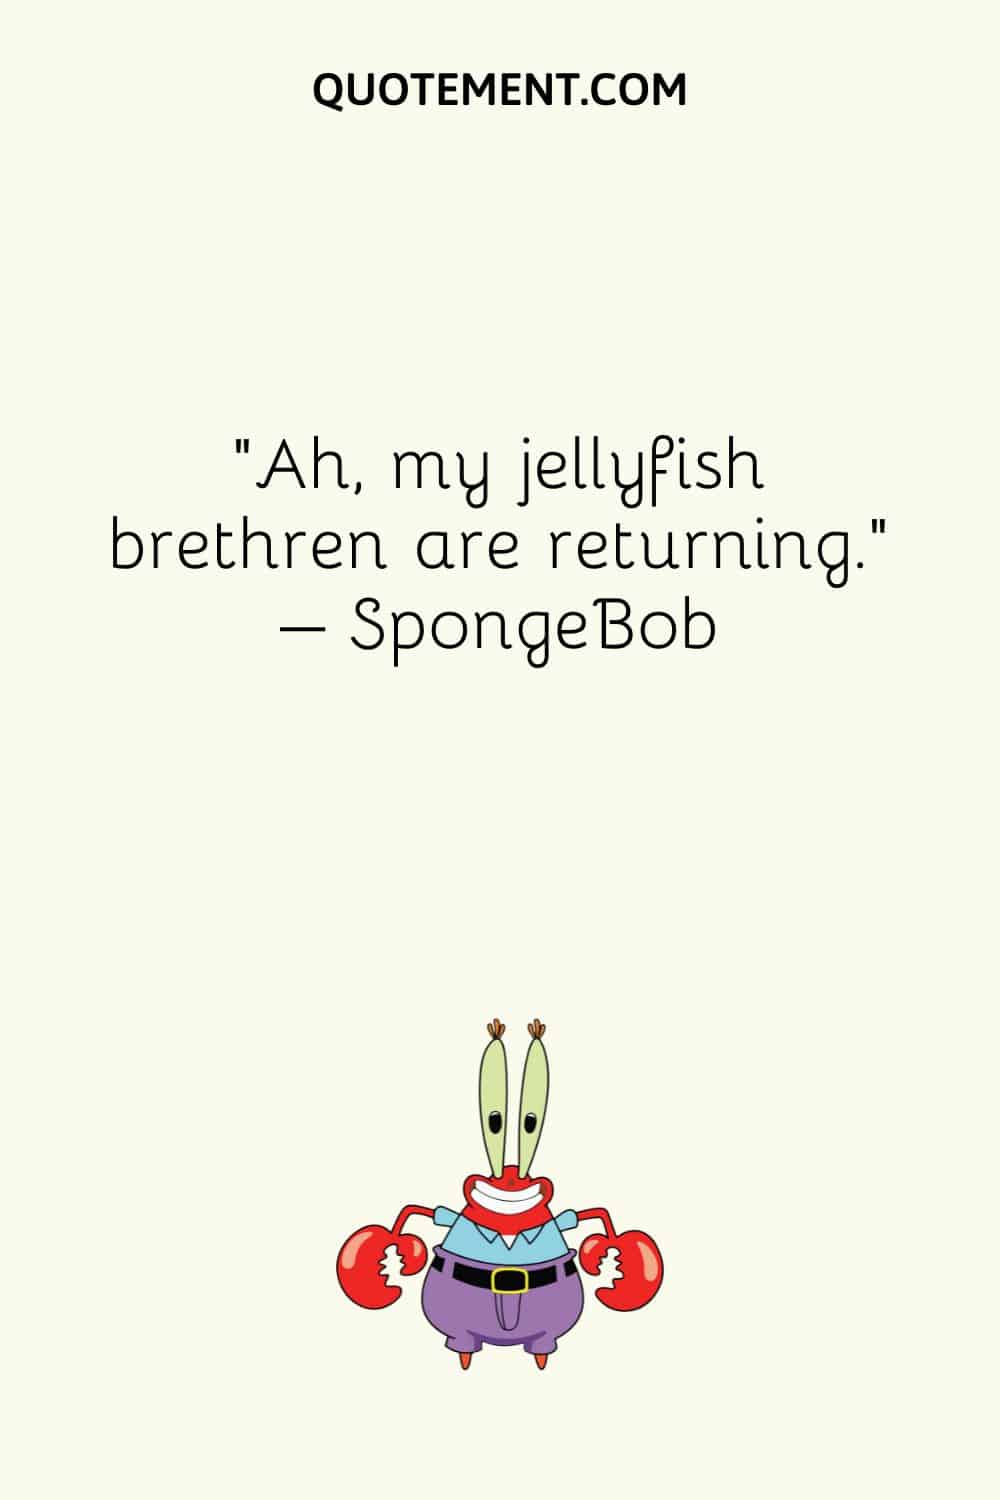 “Ah, my jellyfish brethren are returning.” – SpongeBob